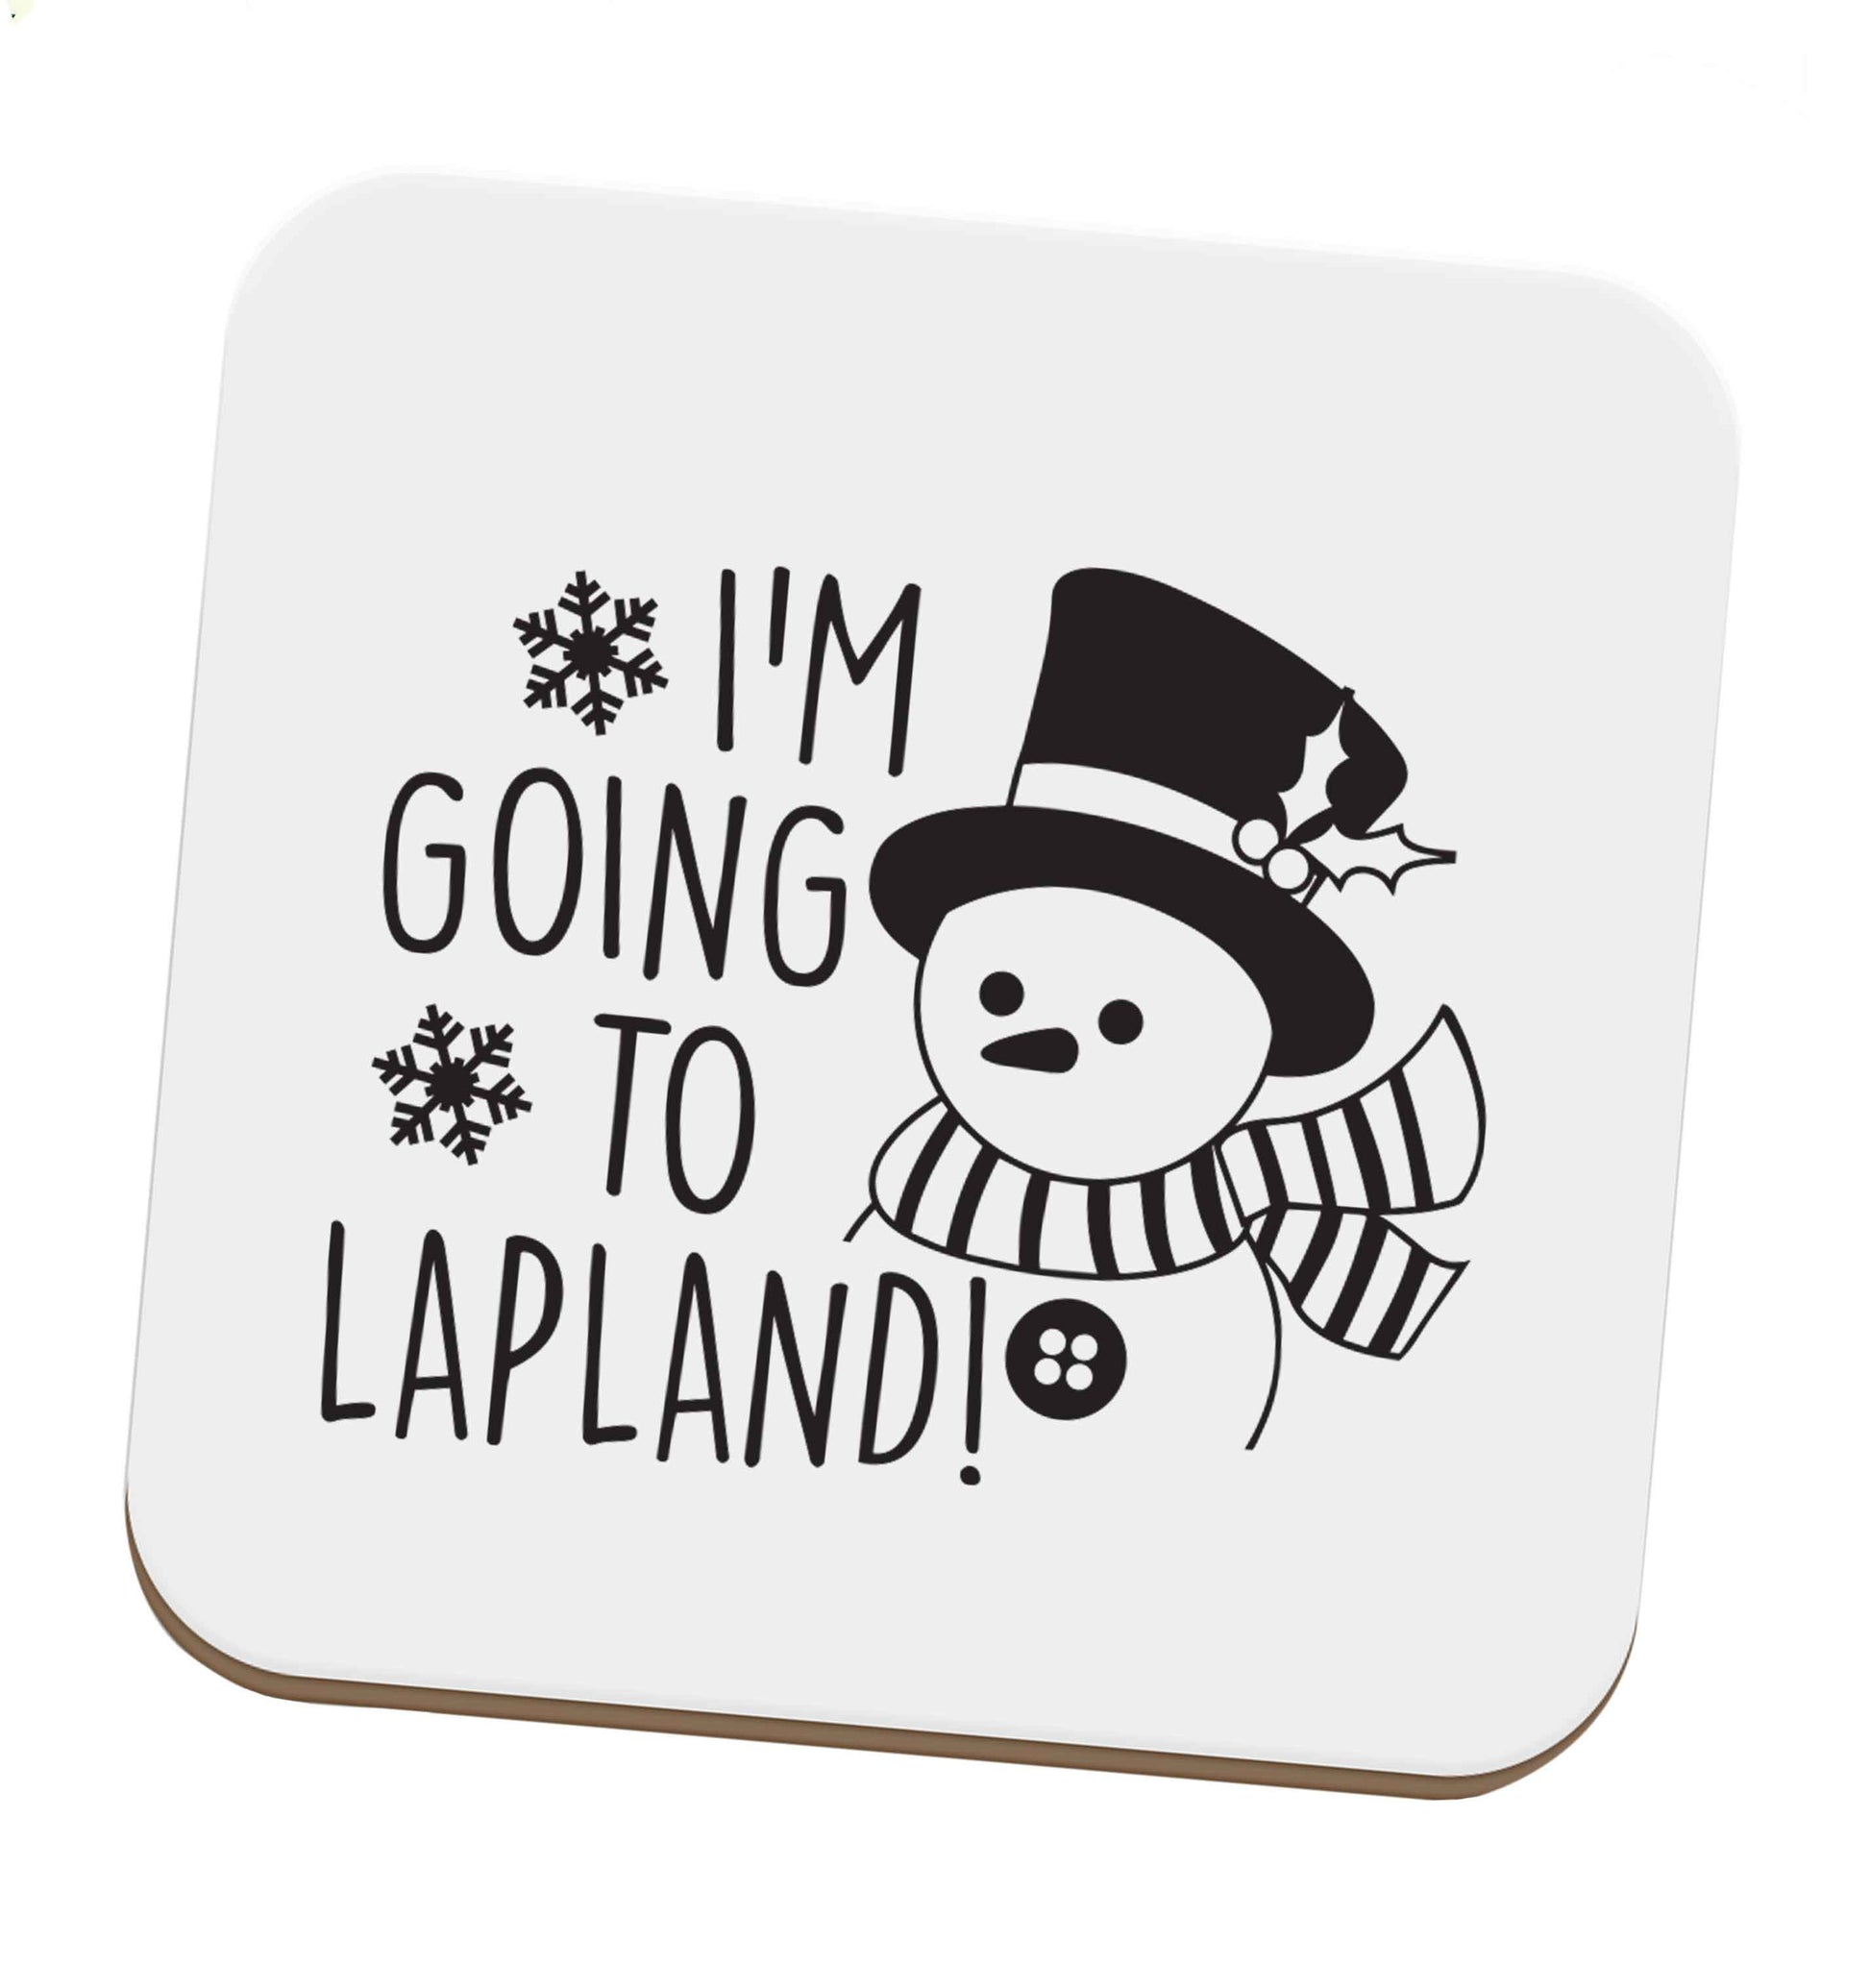 I'm going to Lapland set of four coasters